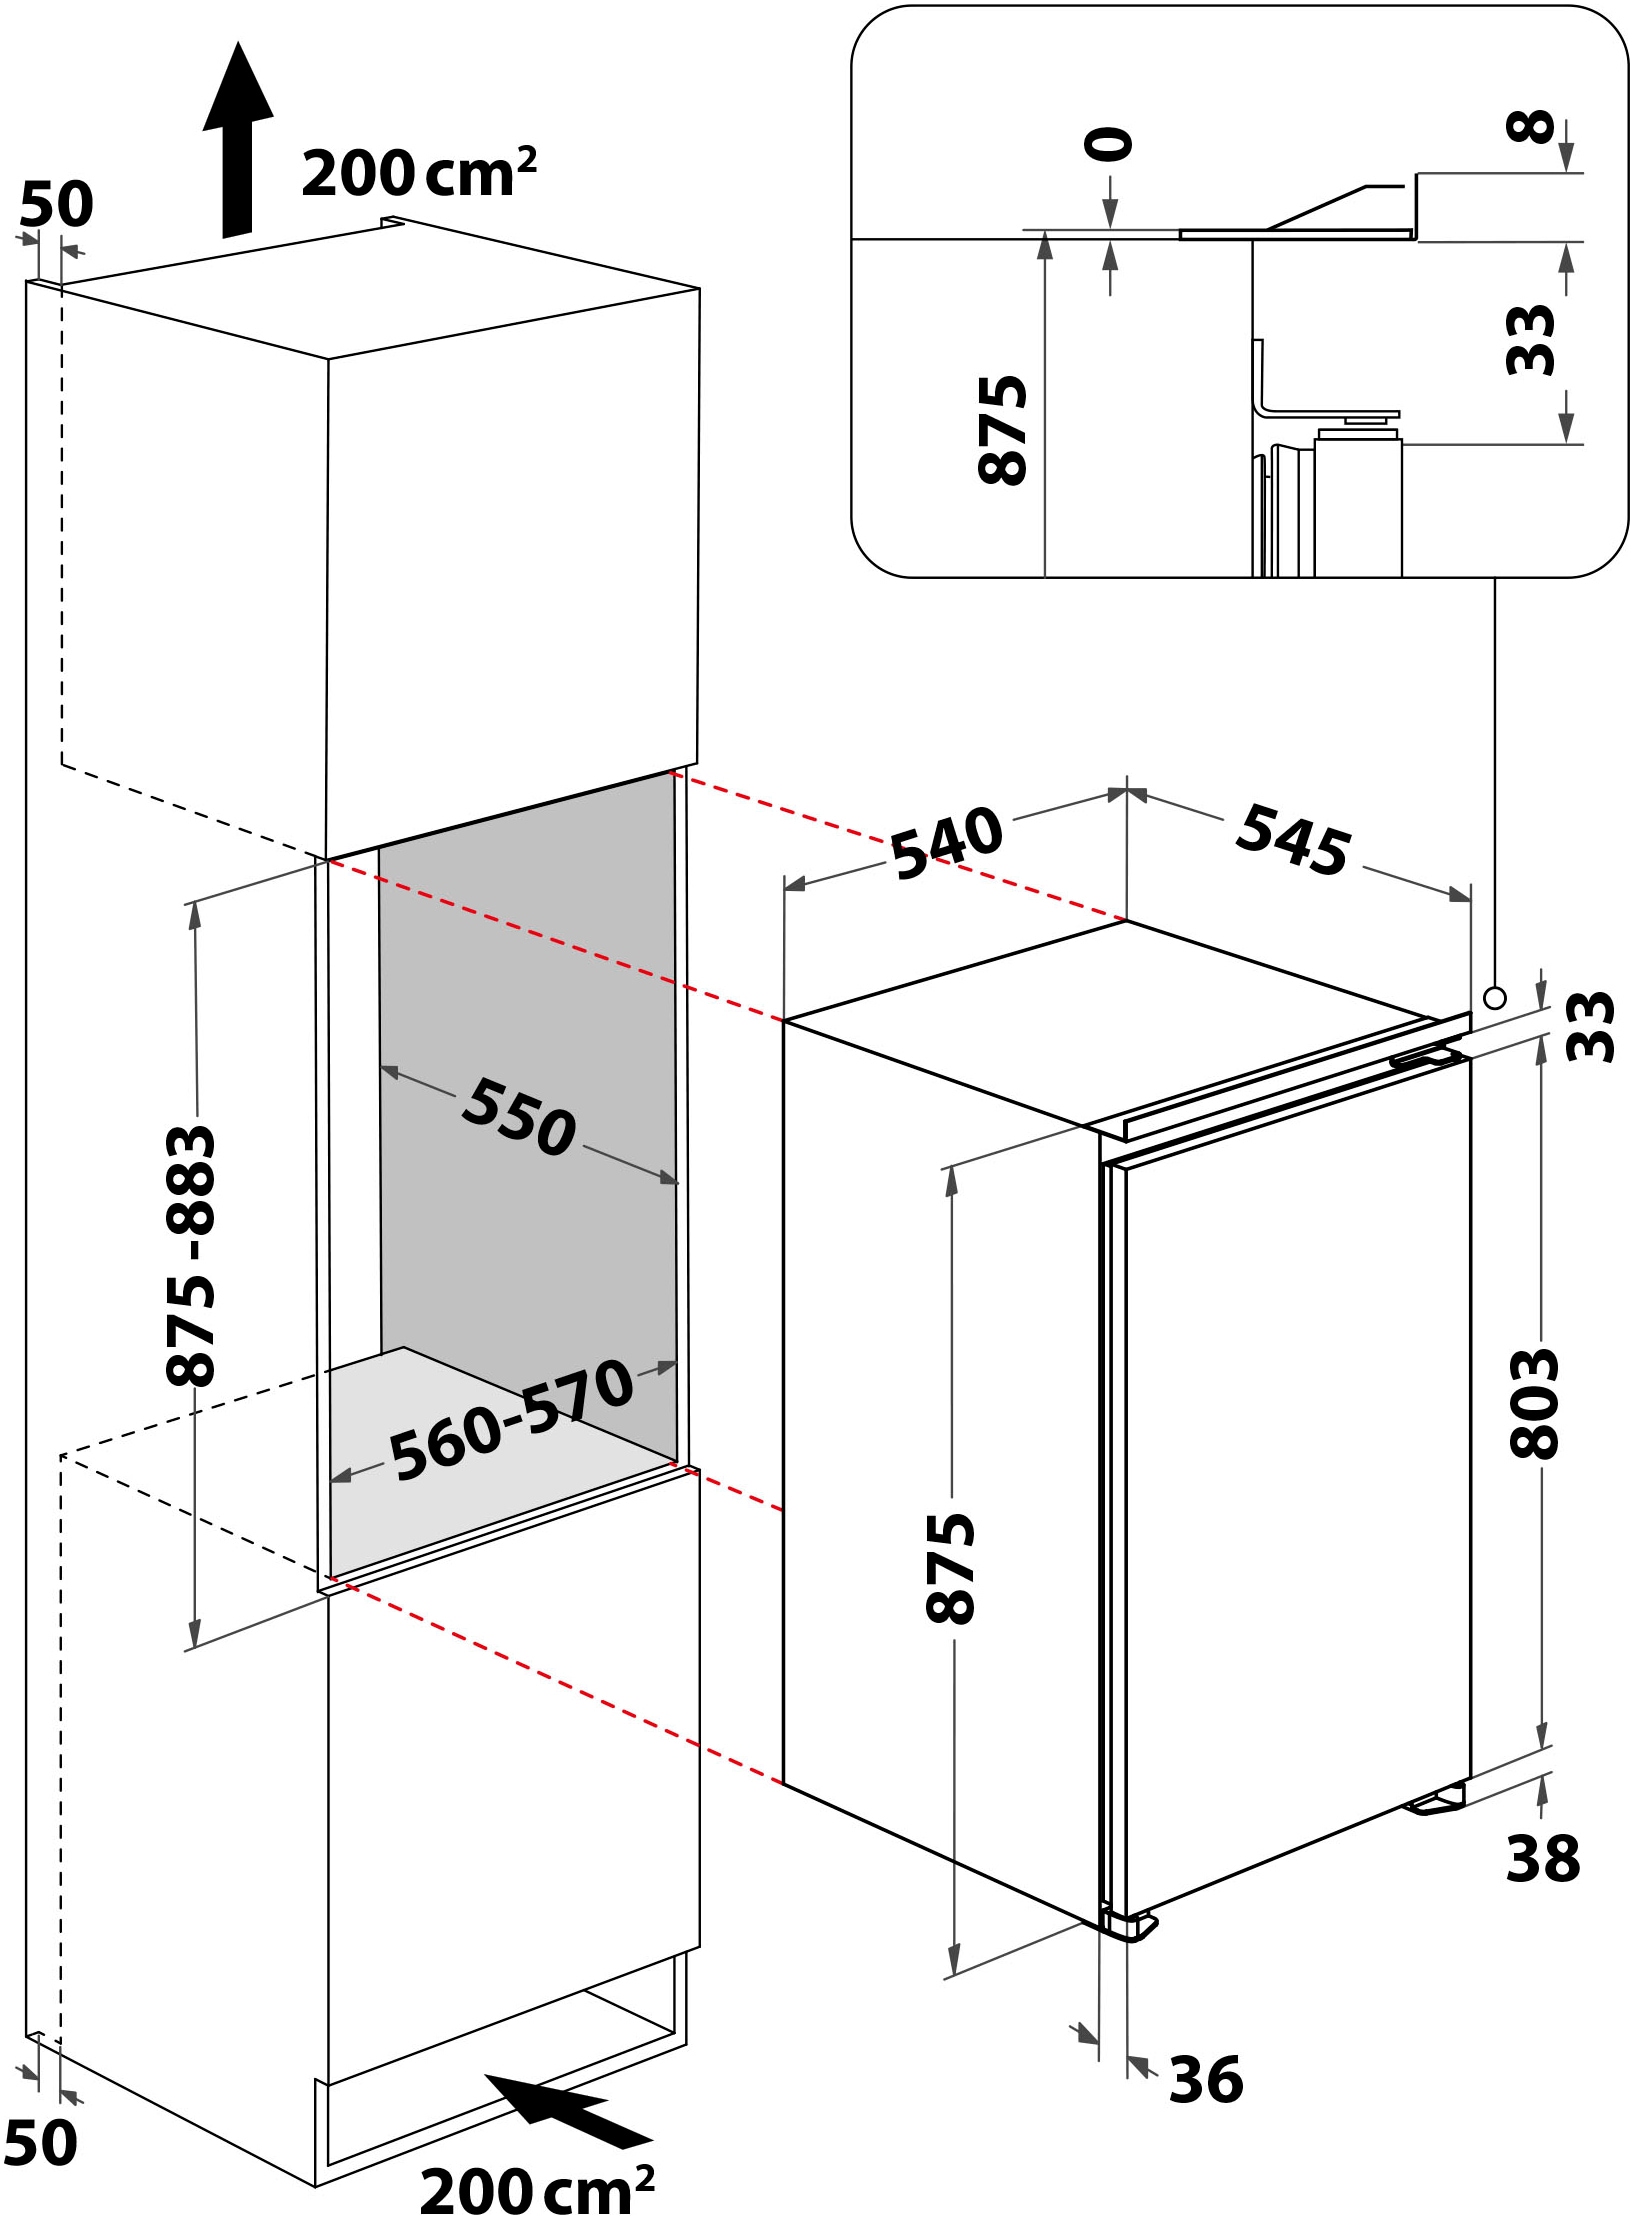 BAUKNECHT Einbaukühlschrank »KSI 9VF2E«, KSI 9VF2E, 87,5 cm hoch, 54 cm breit